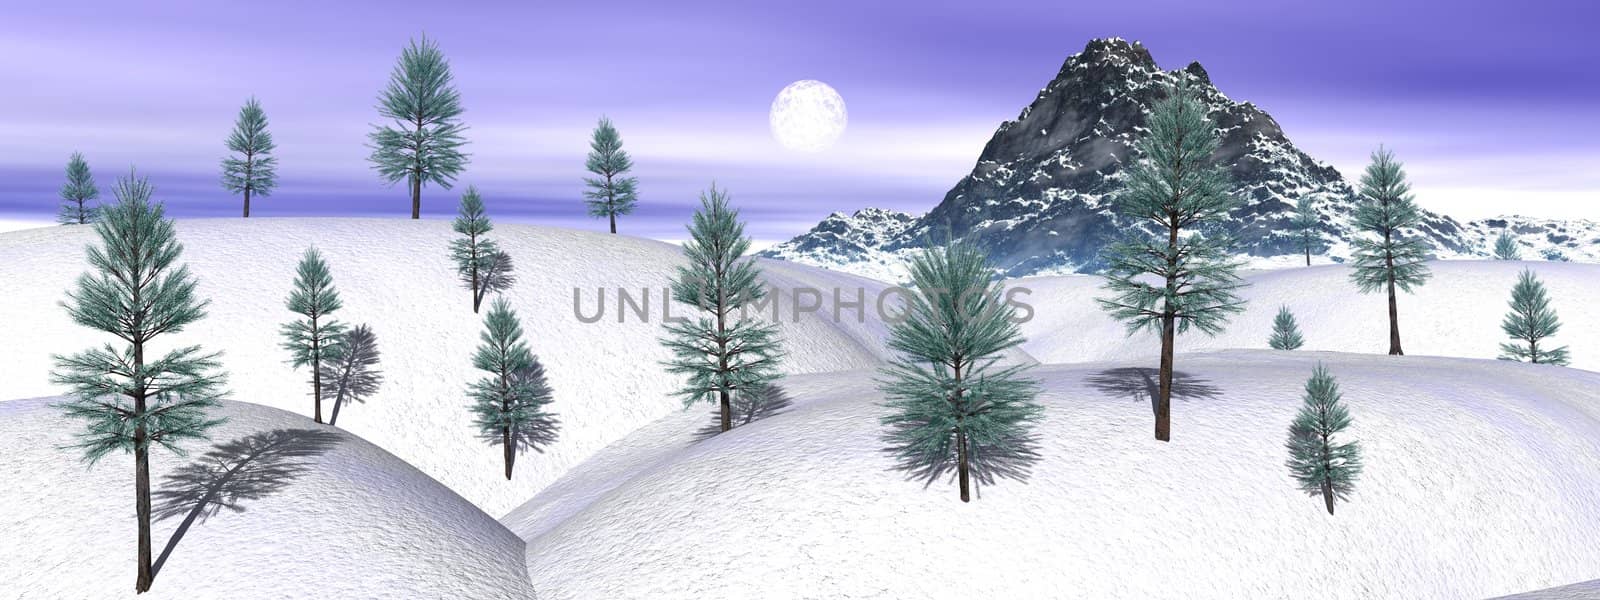 Winter mountain landscape by Elenaphotos21